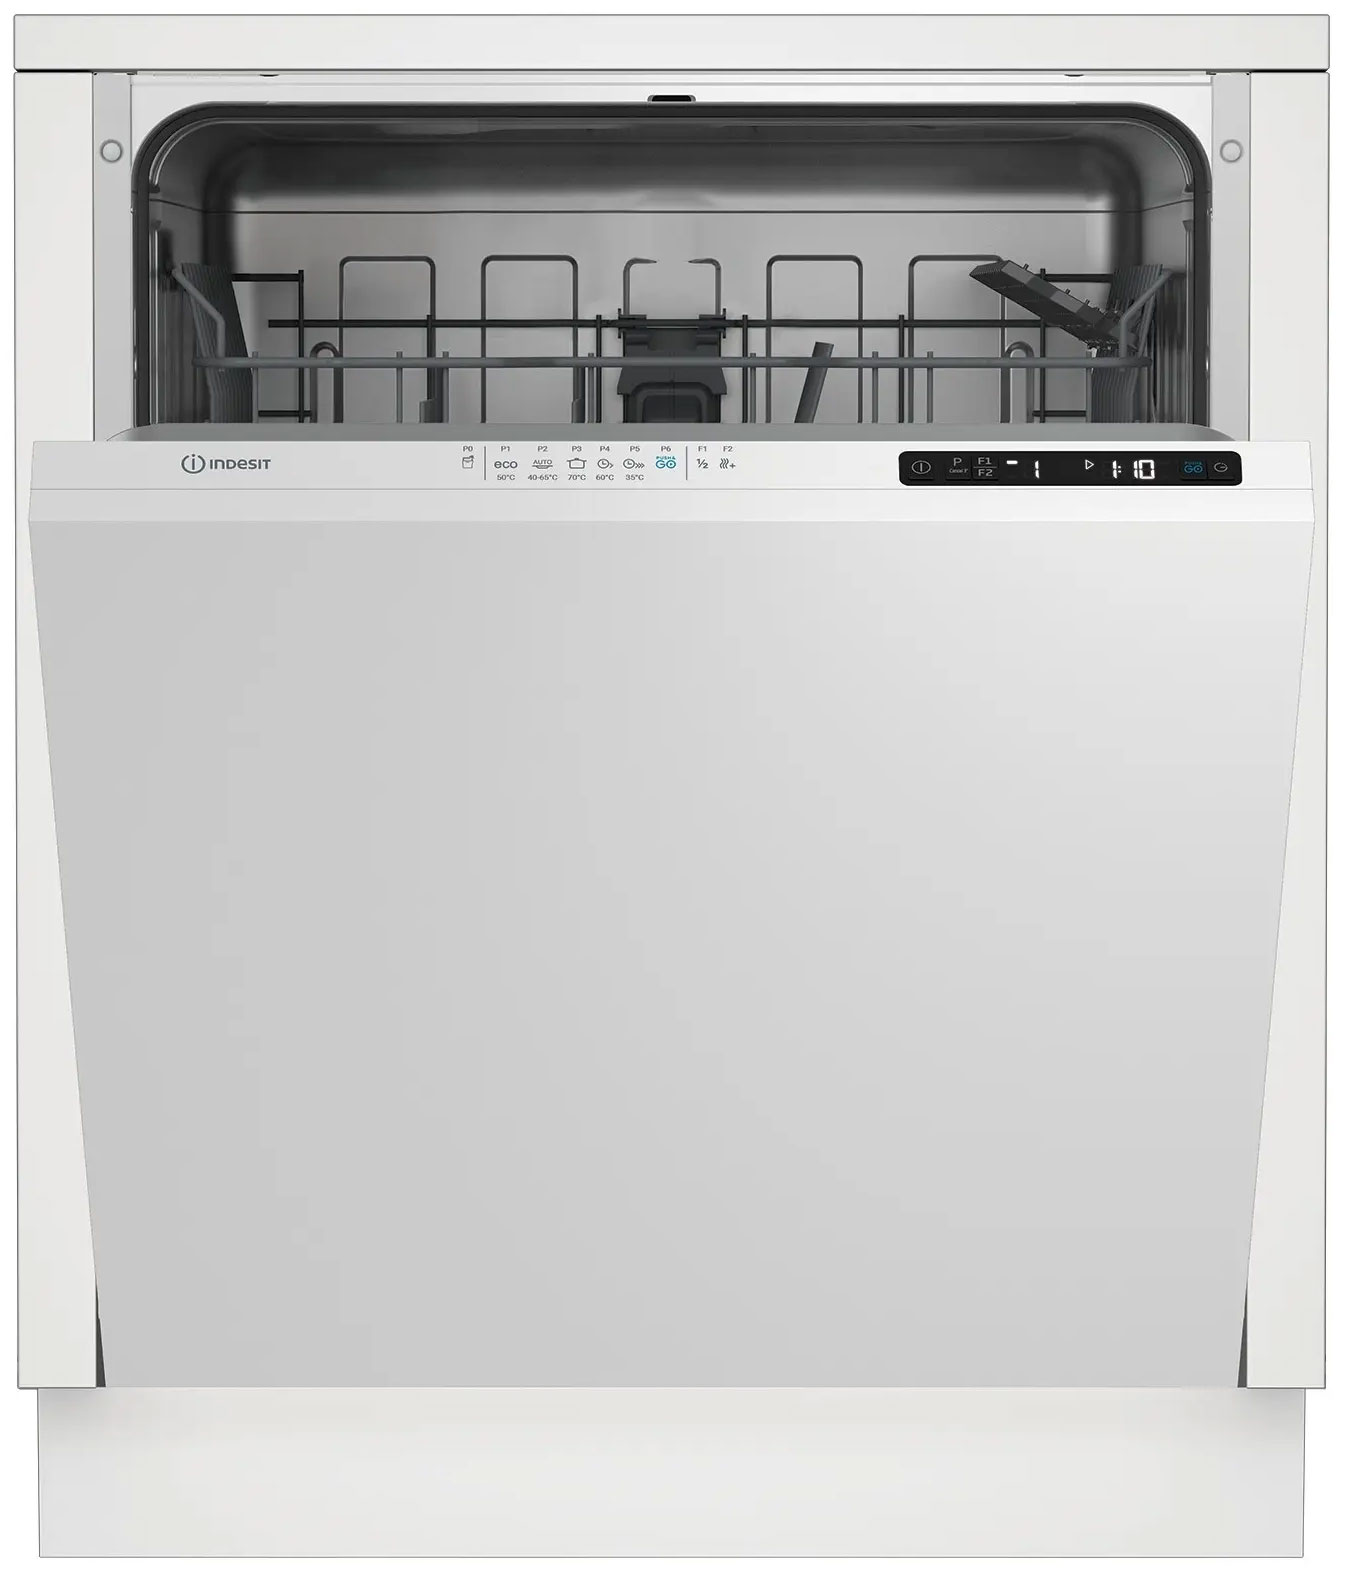 Встраиваемая посудомоечная машина Indesit DI 4C68 AE встраиваемая посудомоечная машина history di 67bc mss